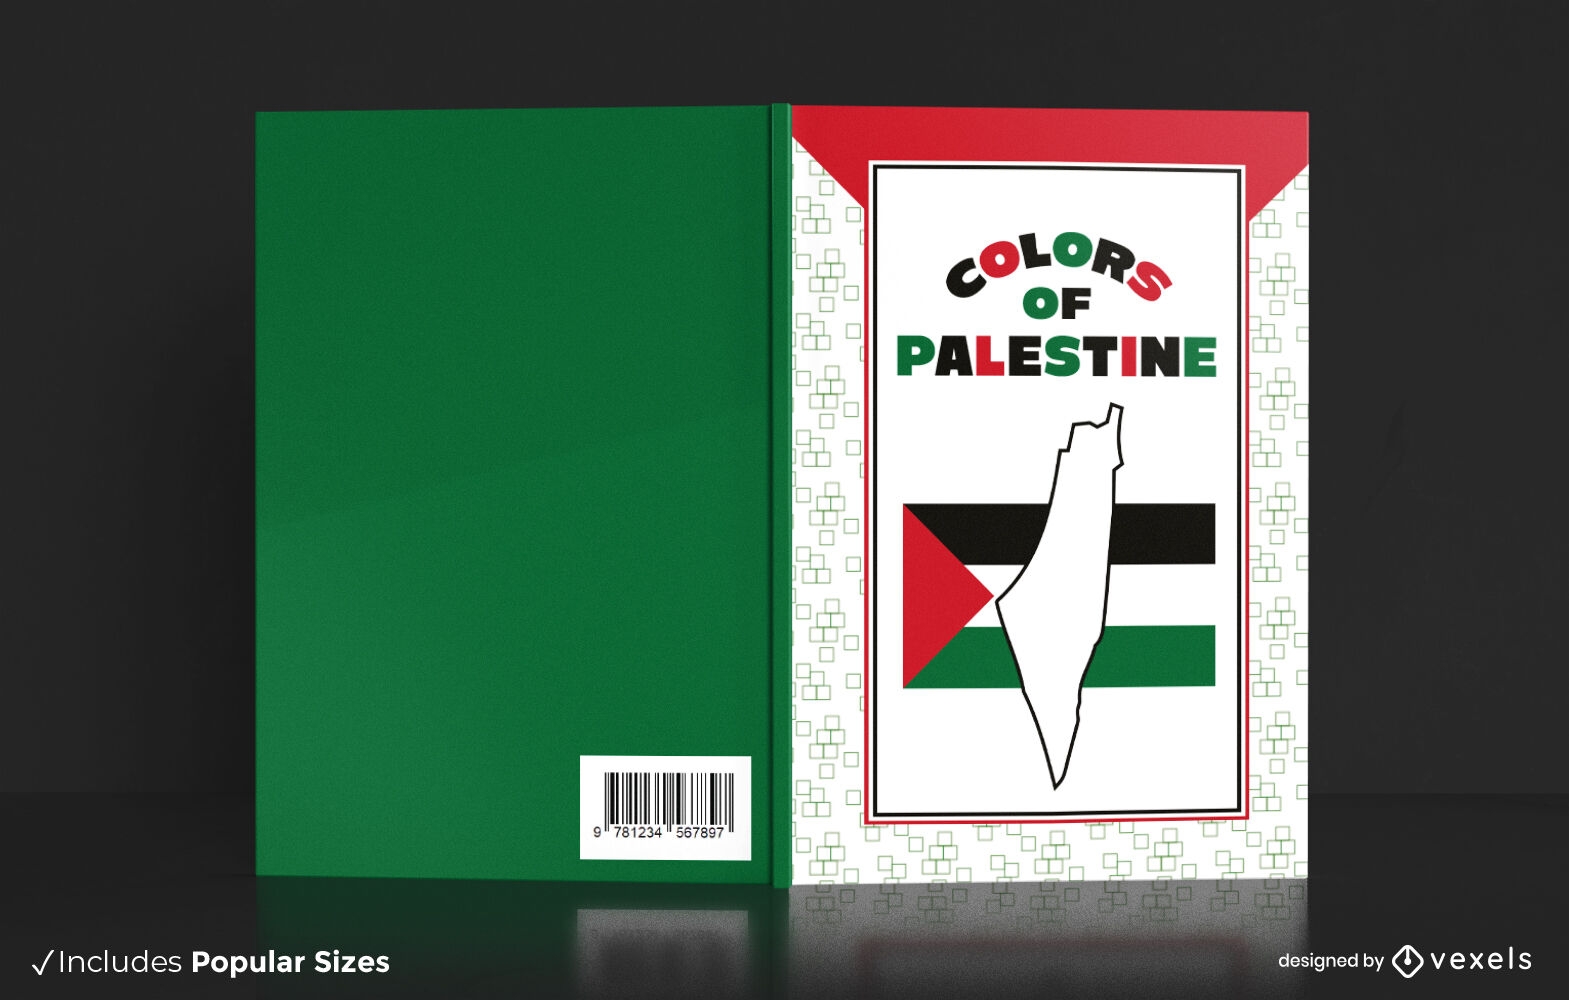 Dise?o de portada de libro de colores palestinos.